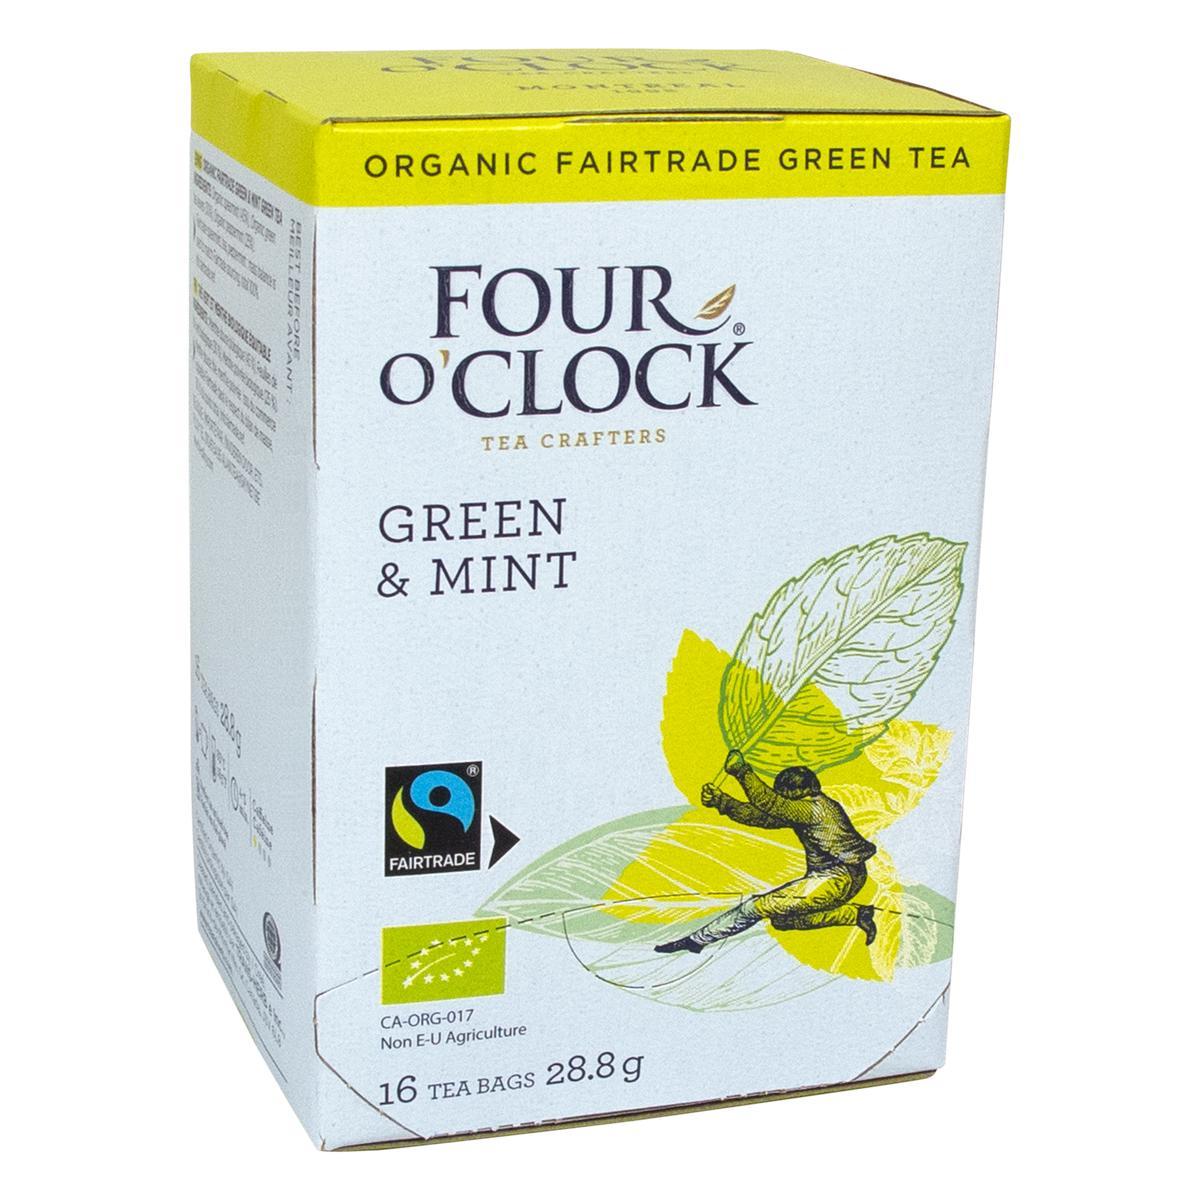 Four O’Clock's Four O'Clock GREEN & MINT'